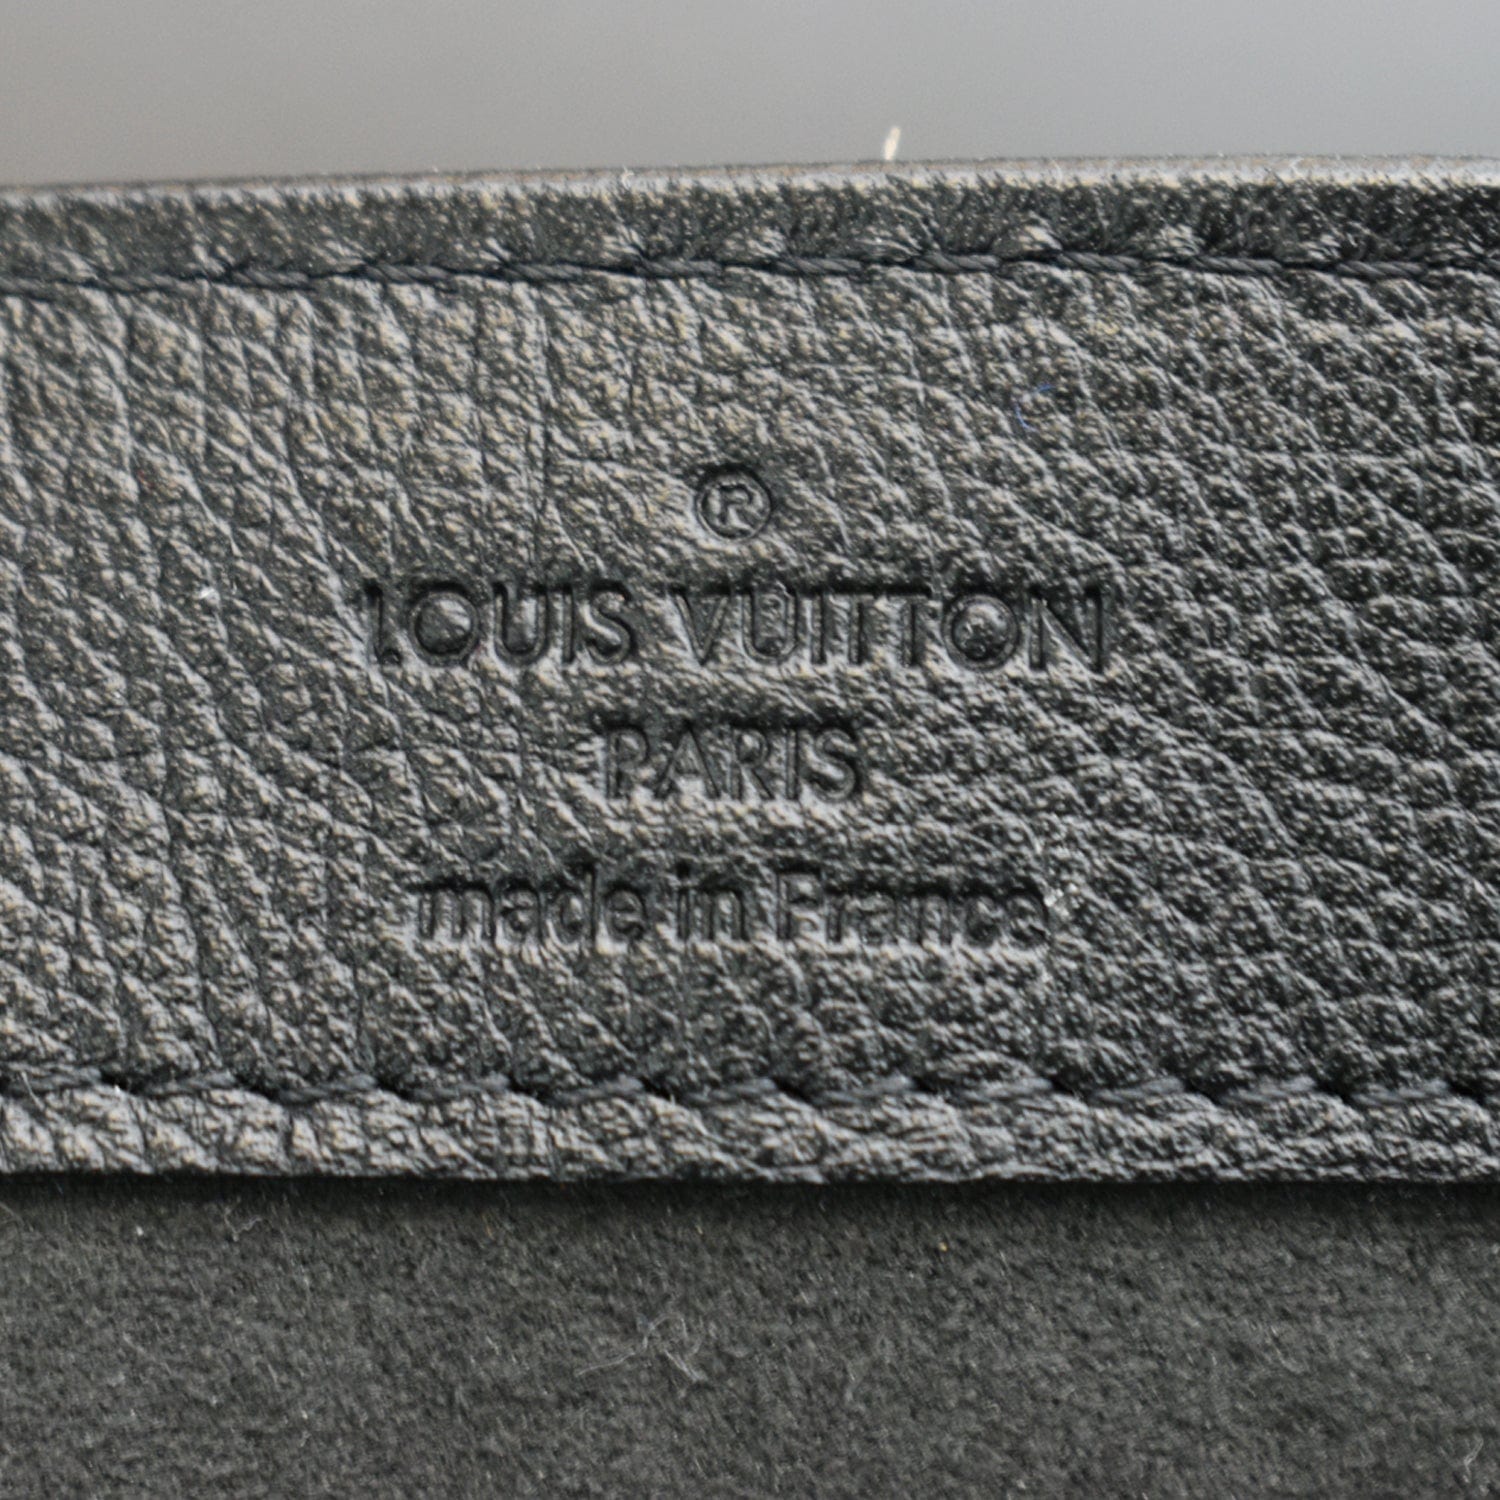 Louis Vuitton Hot Items – DexterFash